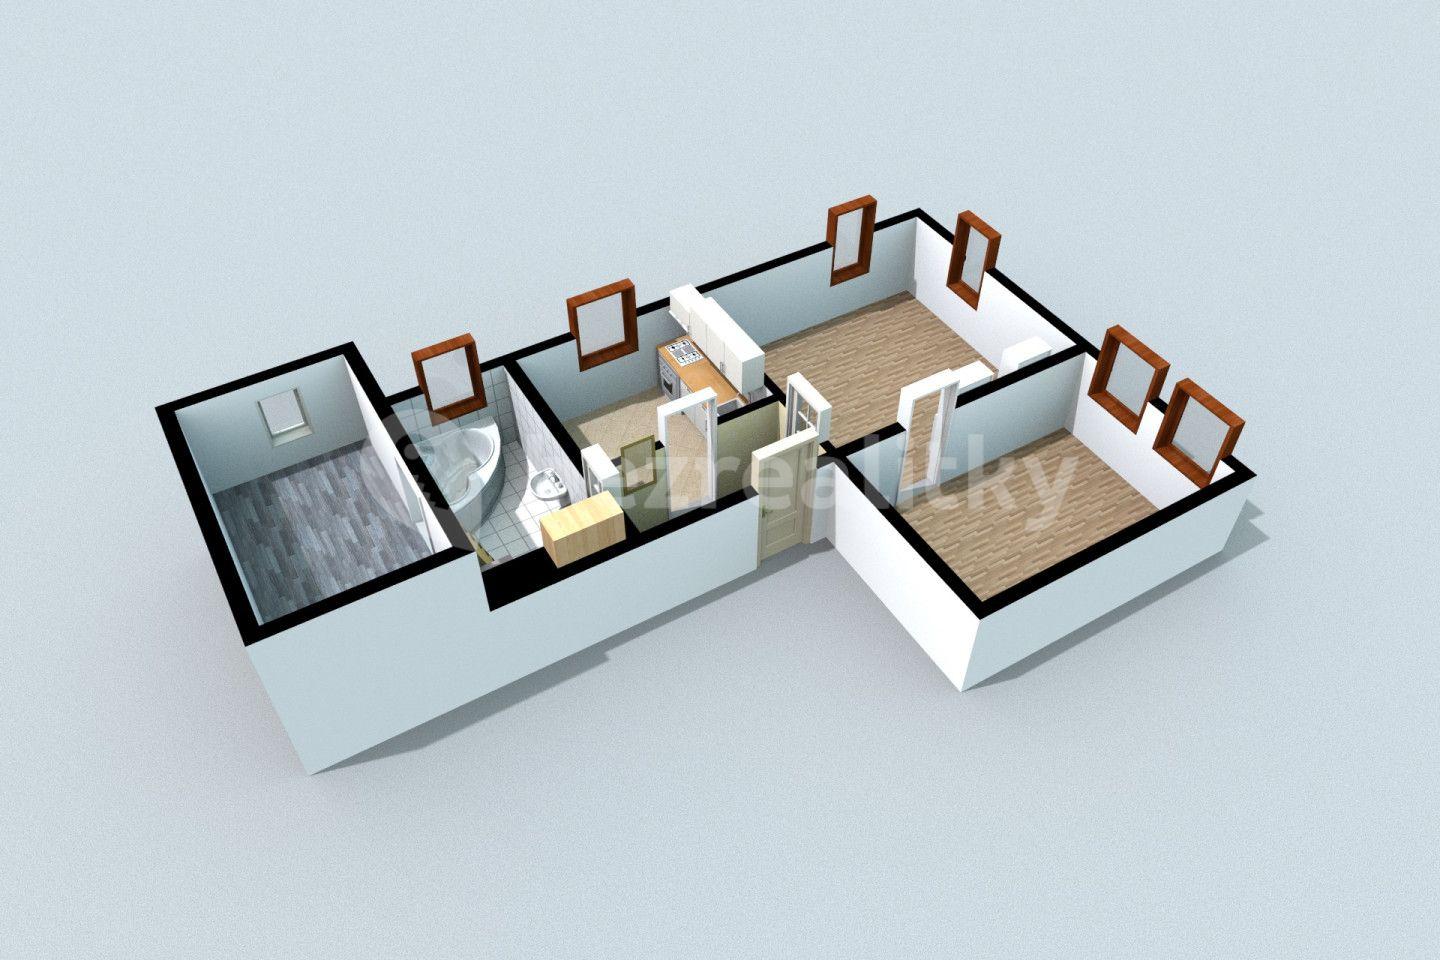 2 bedroom flat for sale, 62 m², Smetanova, Jablonec nad Nisou, Liberecký Region